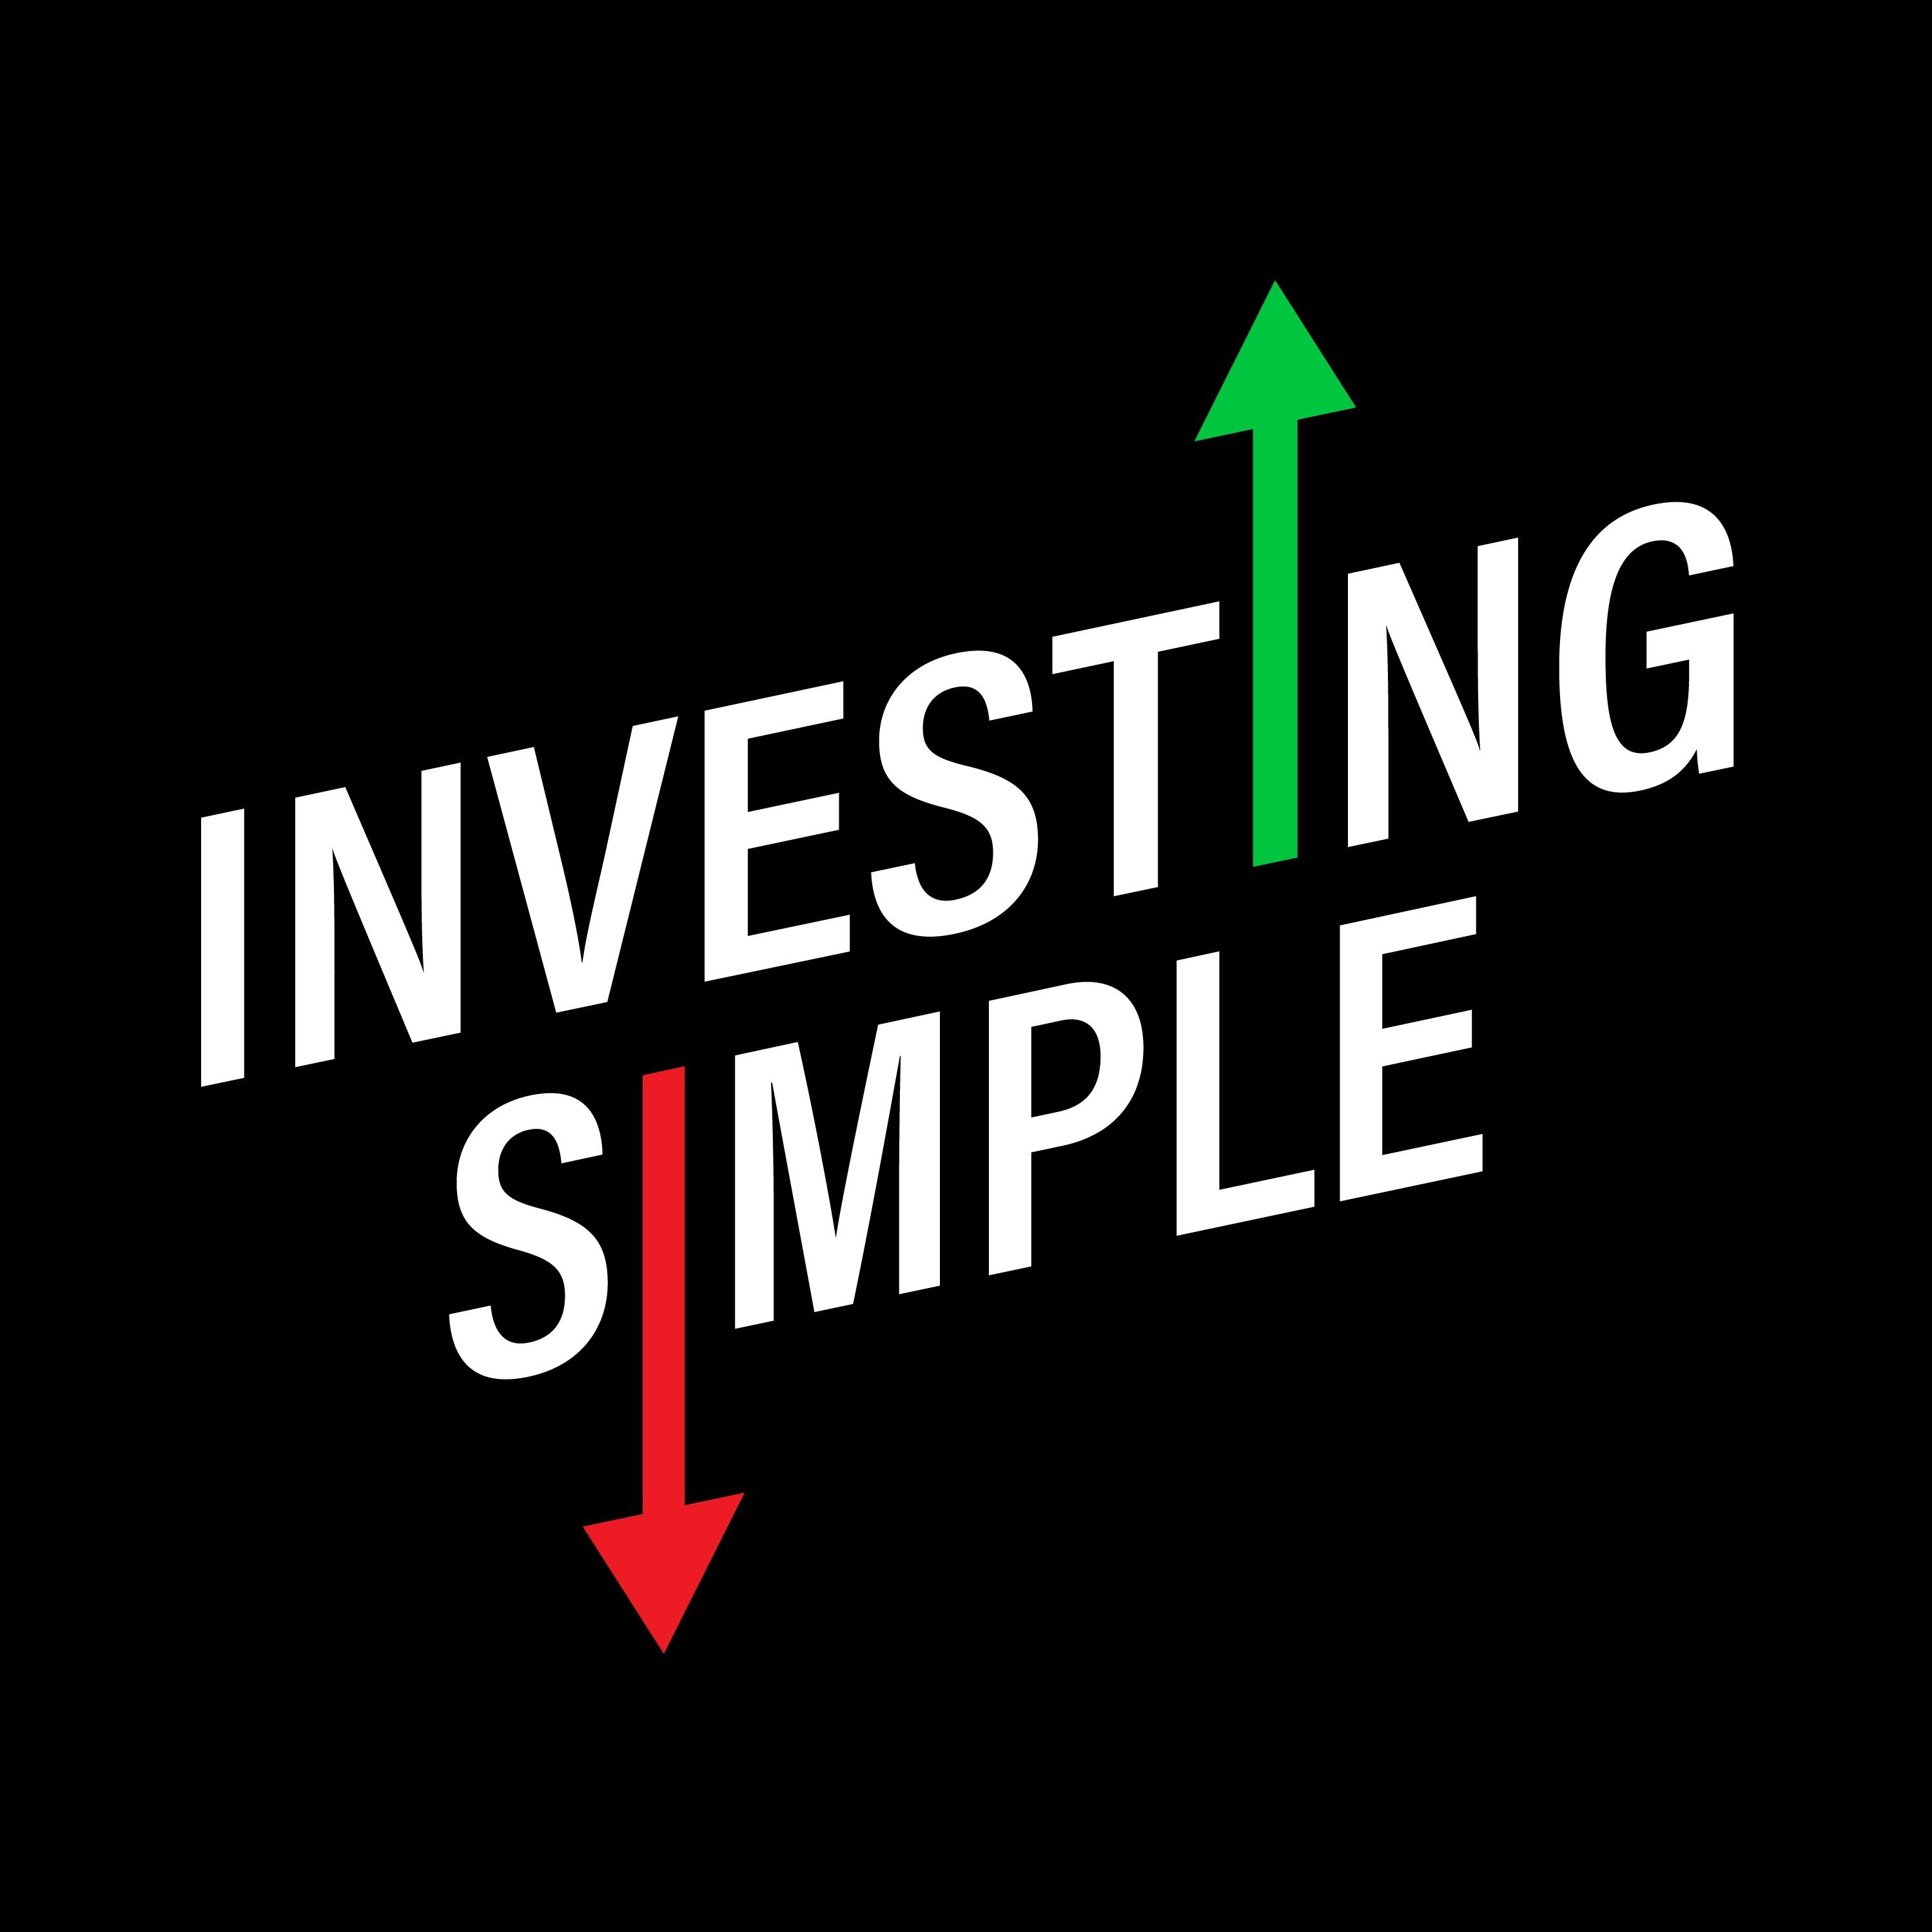 Investing Simple